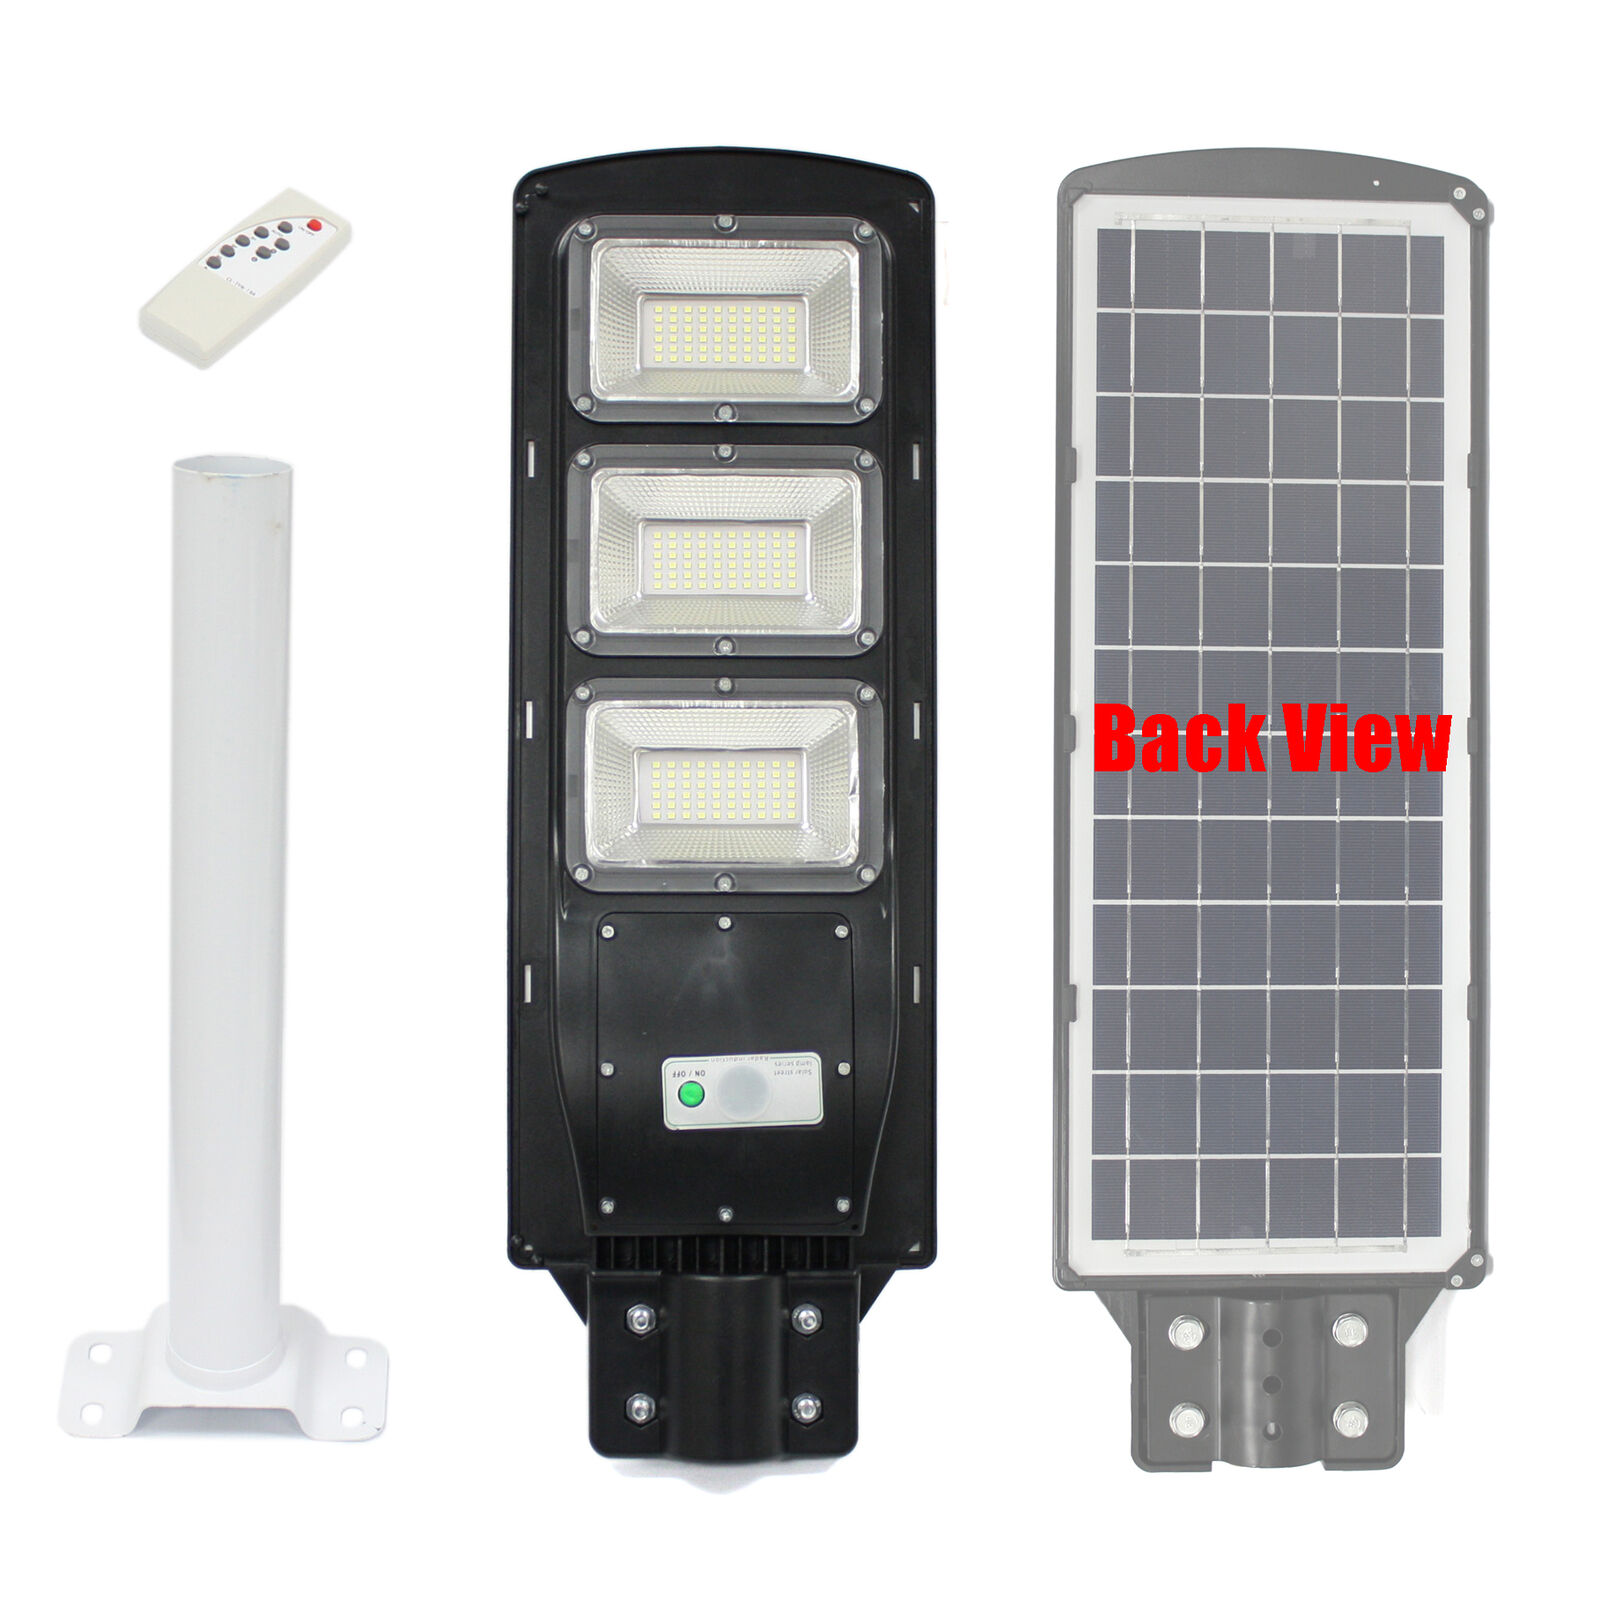 Details about   Commercial 999999LM Solar Street Light LED IP67 Dusk Dawn PIR Sensor+Pole+Remote 